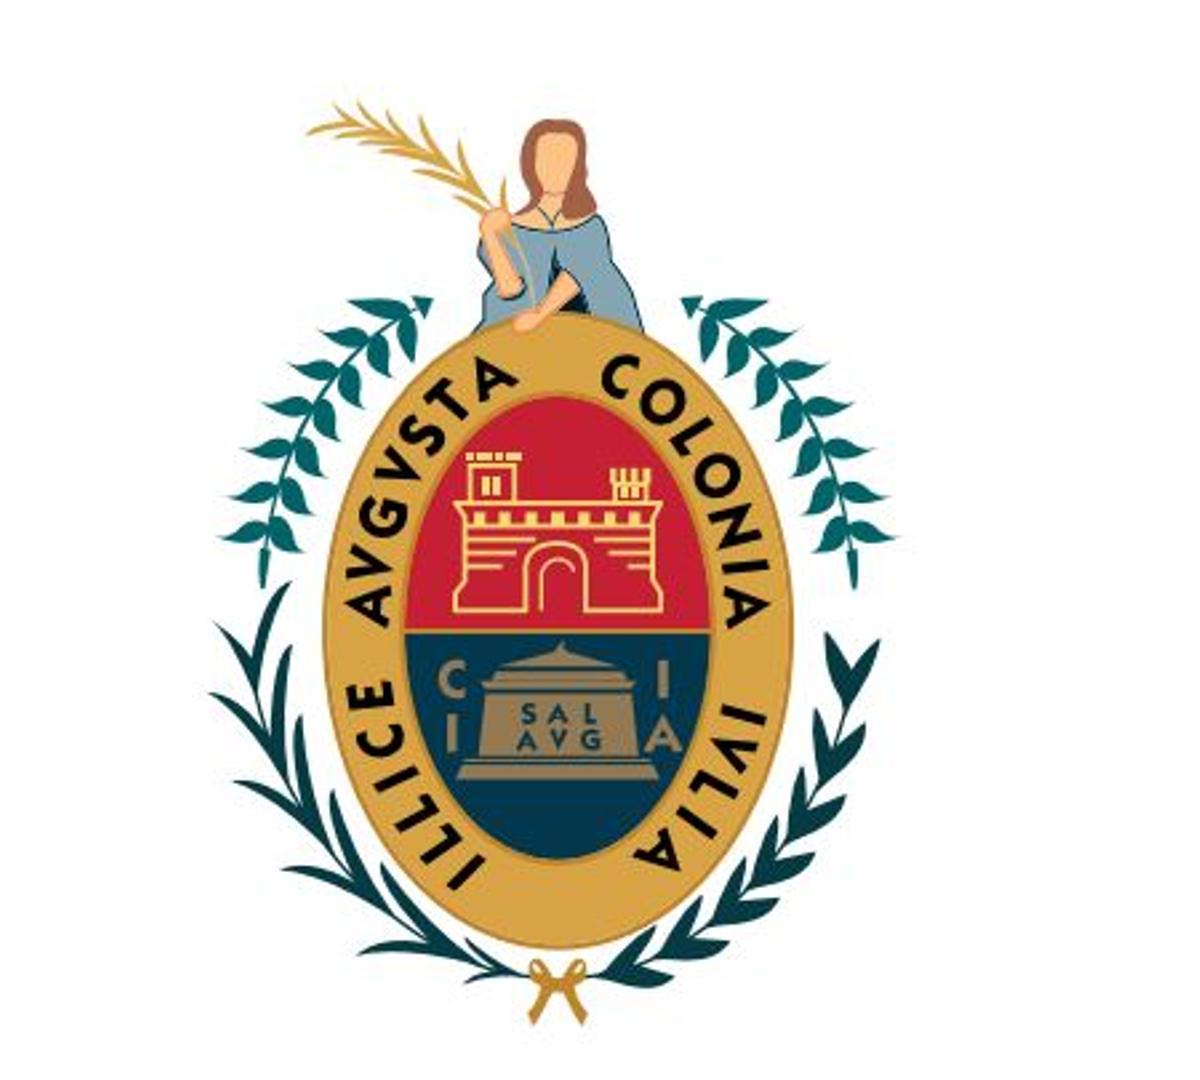 El escudo que se incorpora a la imagen corporativa municipal de Elche